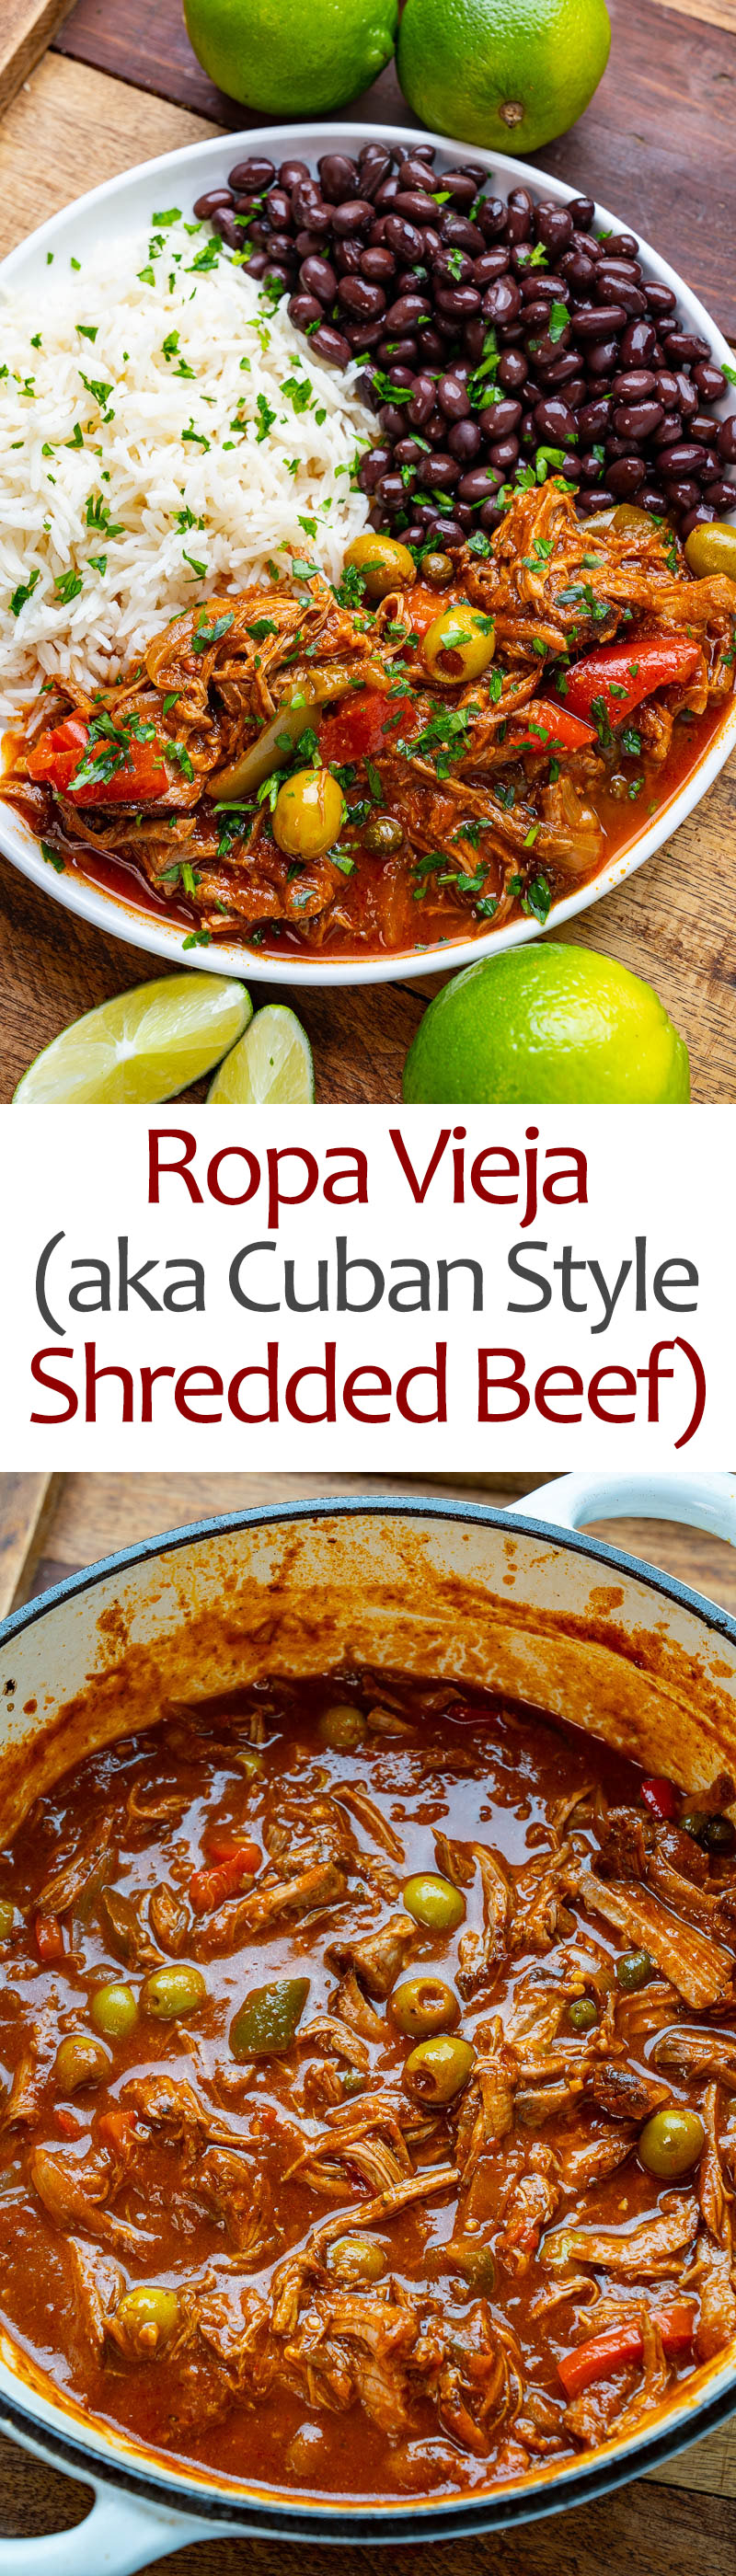 Ropa Vieja (aka Cuban Style Shredded Beef)